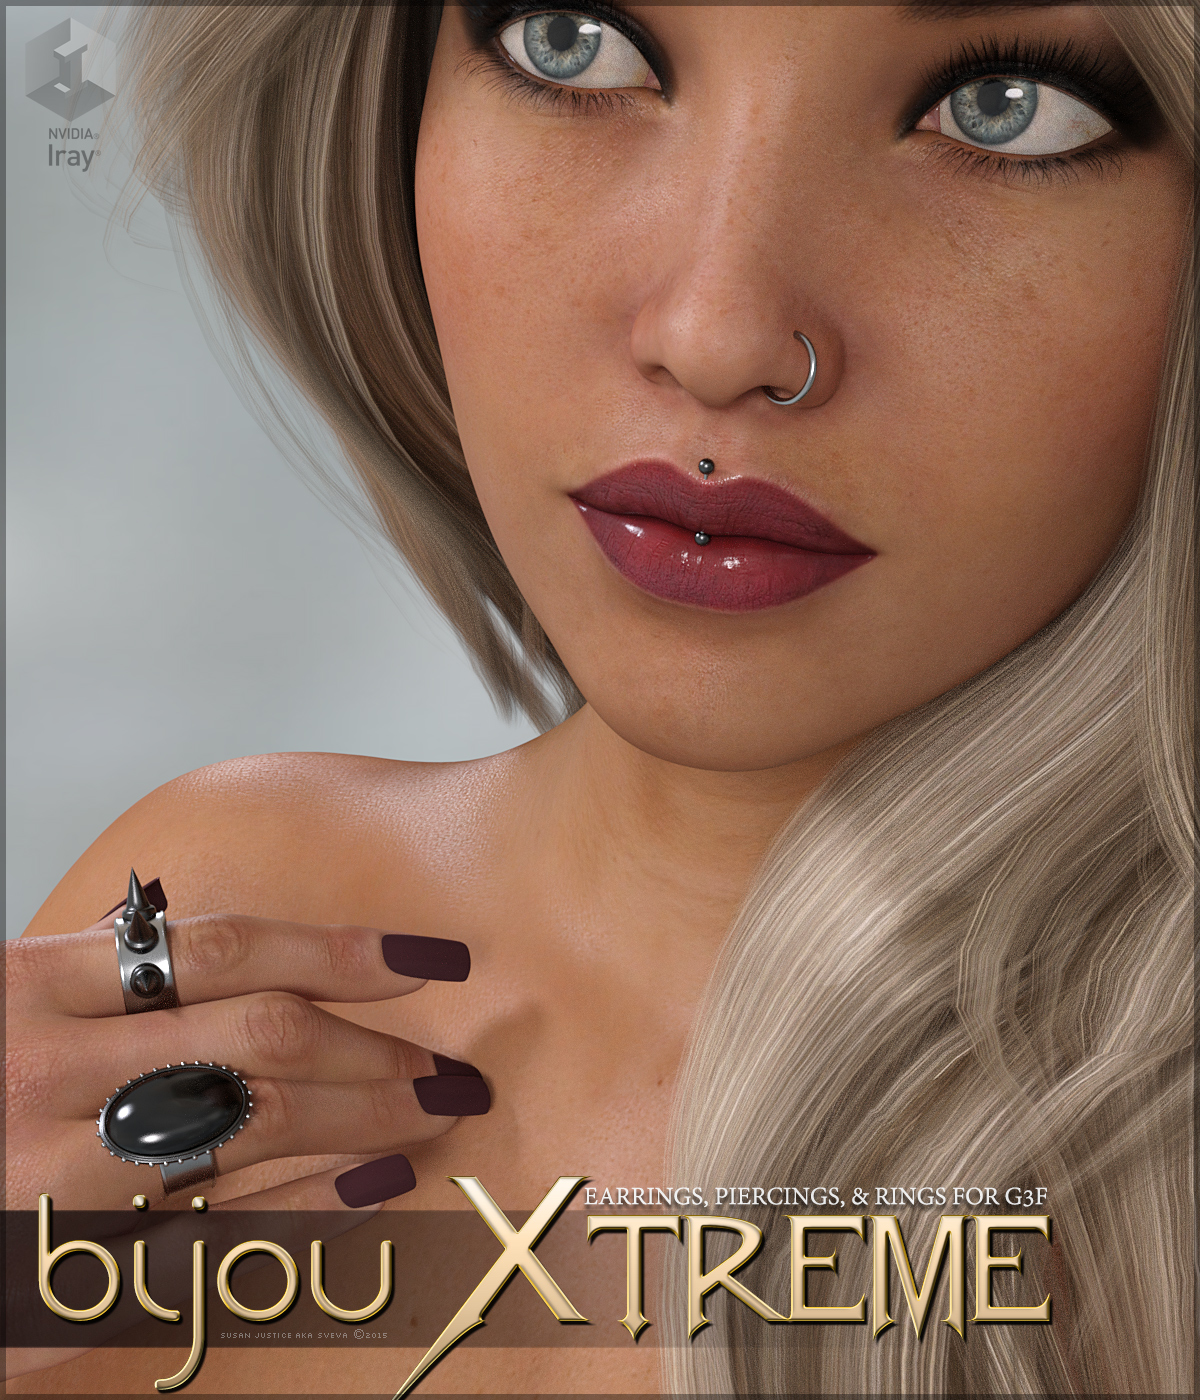 SV's Bijou Xtreme by: Sveva, 3D Models by Daz 3D